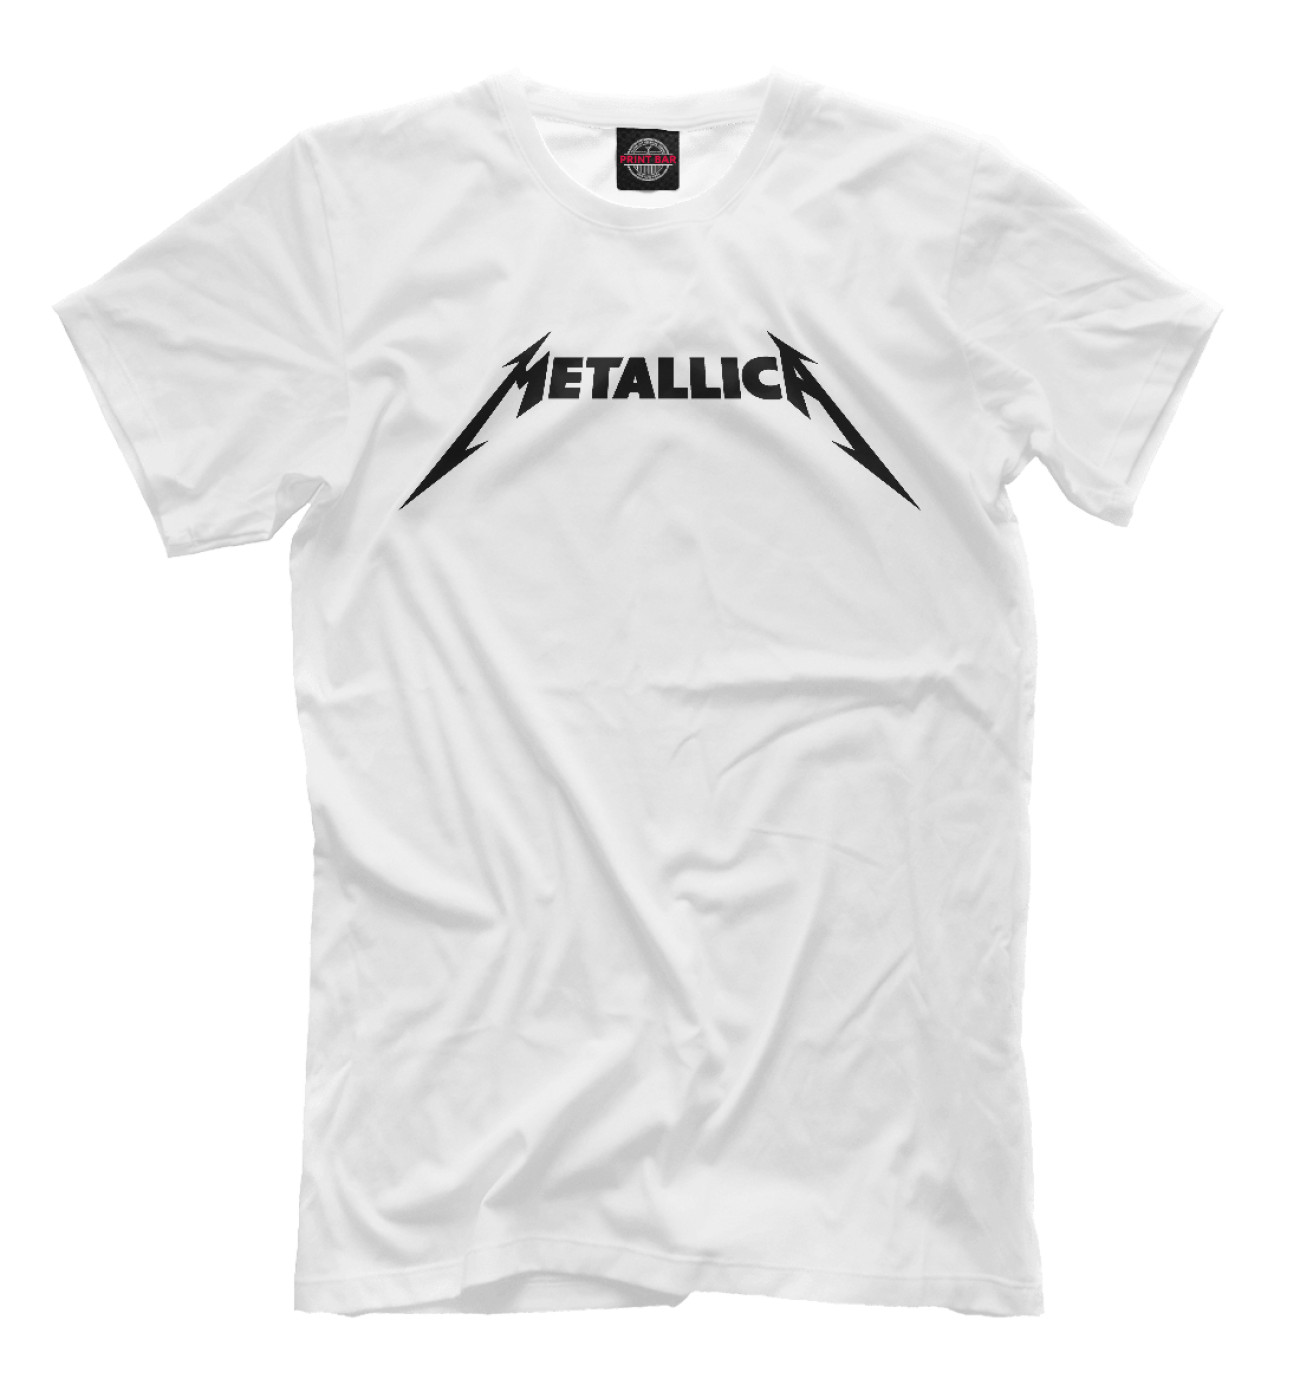 Мужская Футболка Metallica, артикул: MET-884314-fut-2